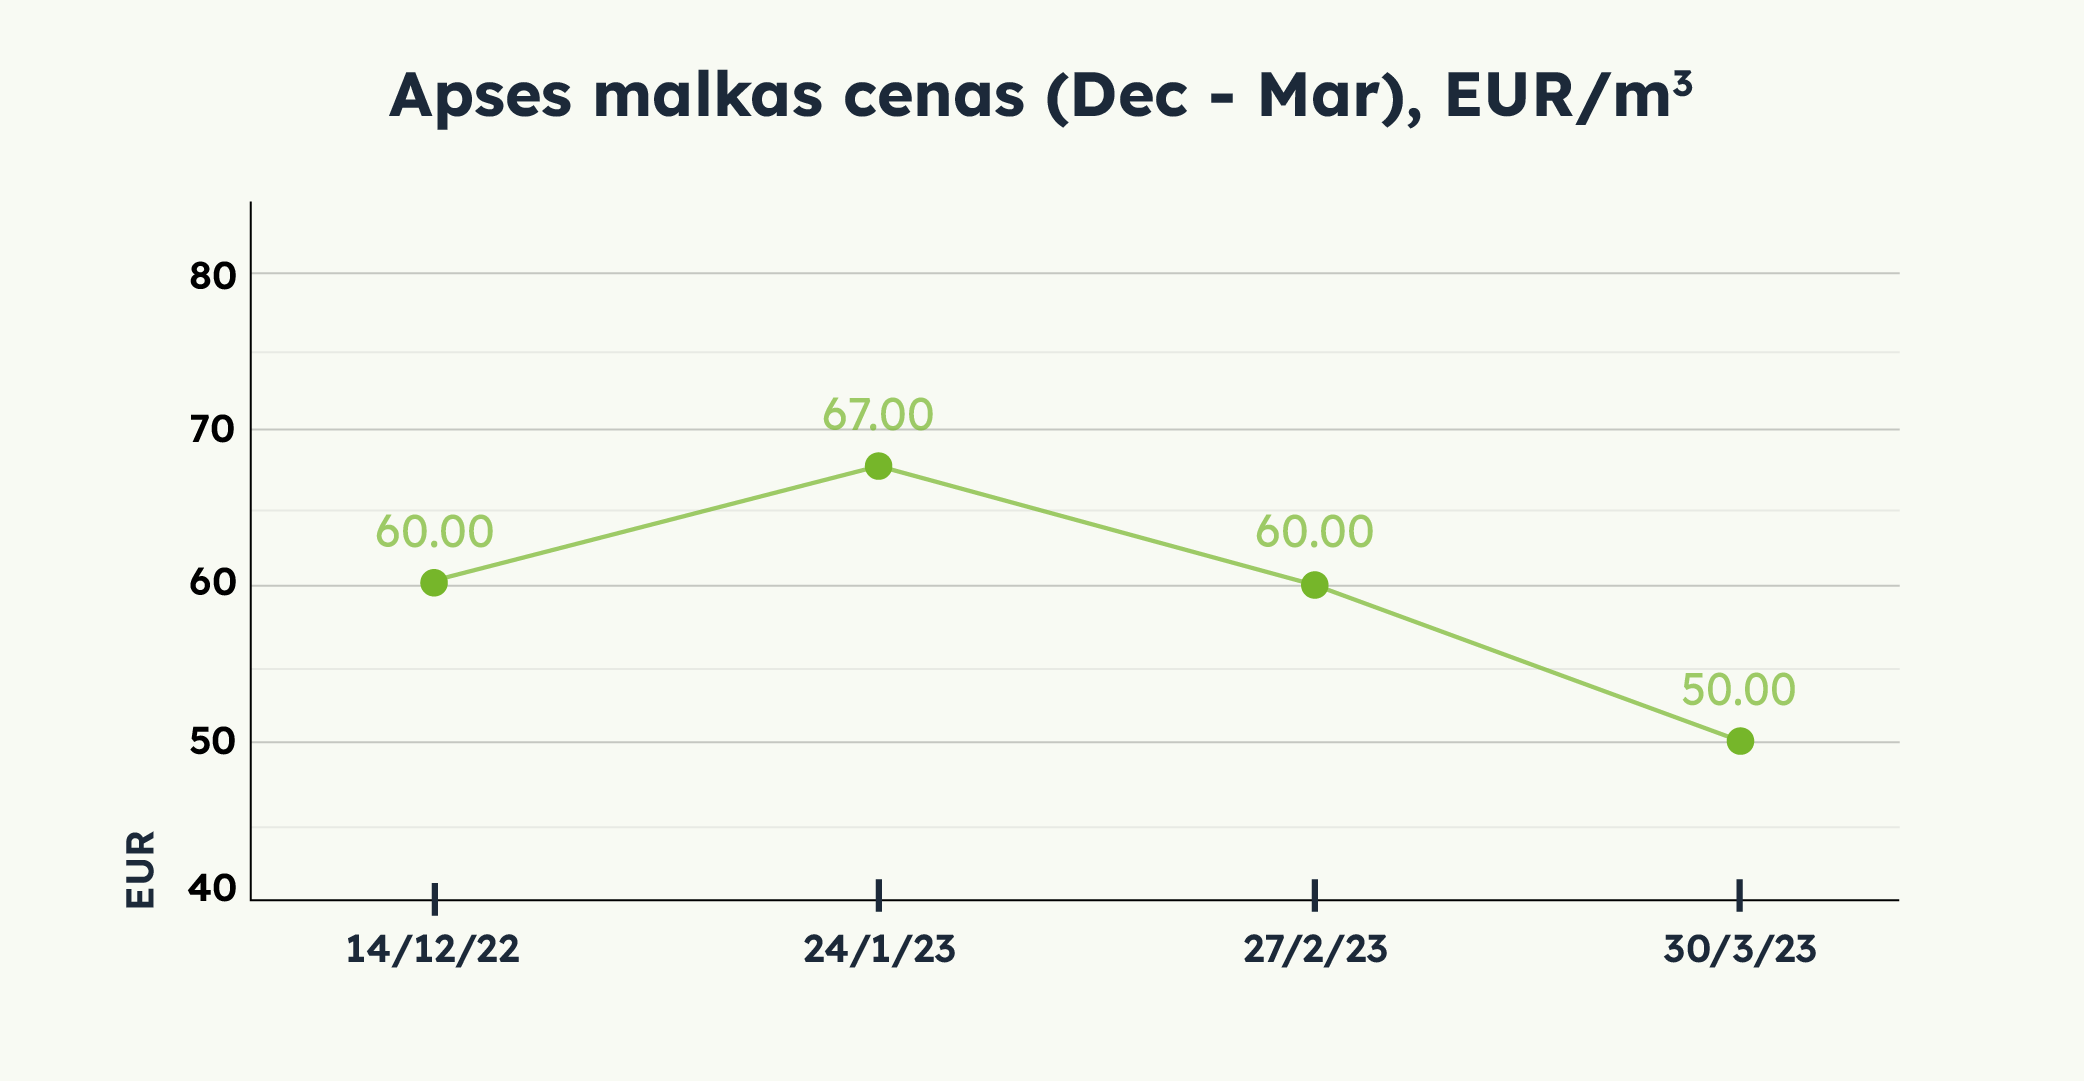 Apses malkas cenas (Dec - Mar), EUR/m3